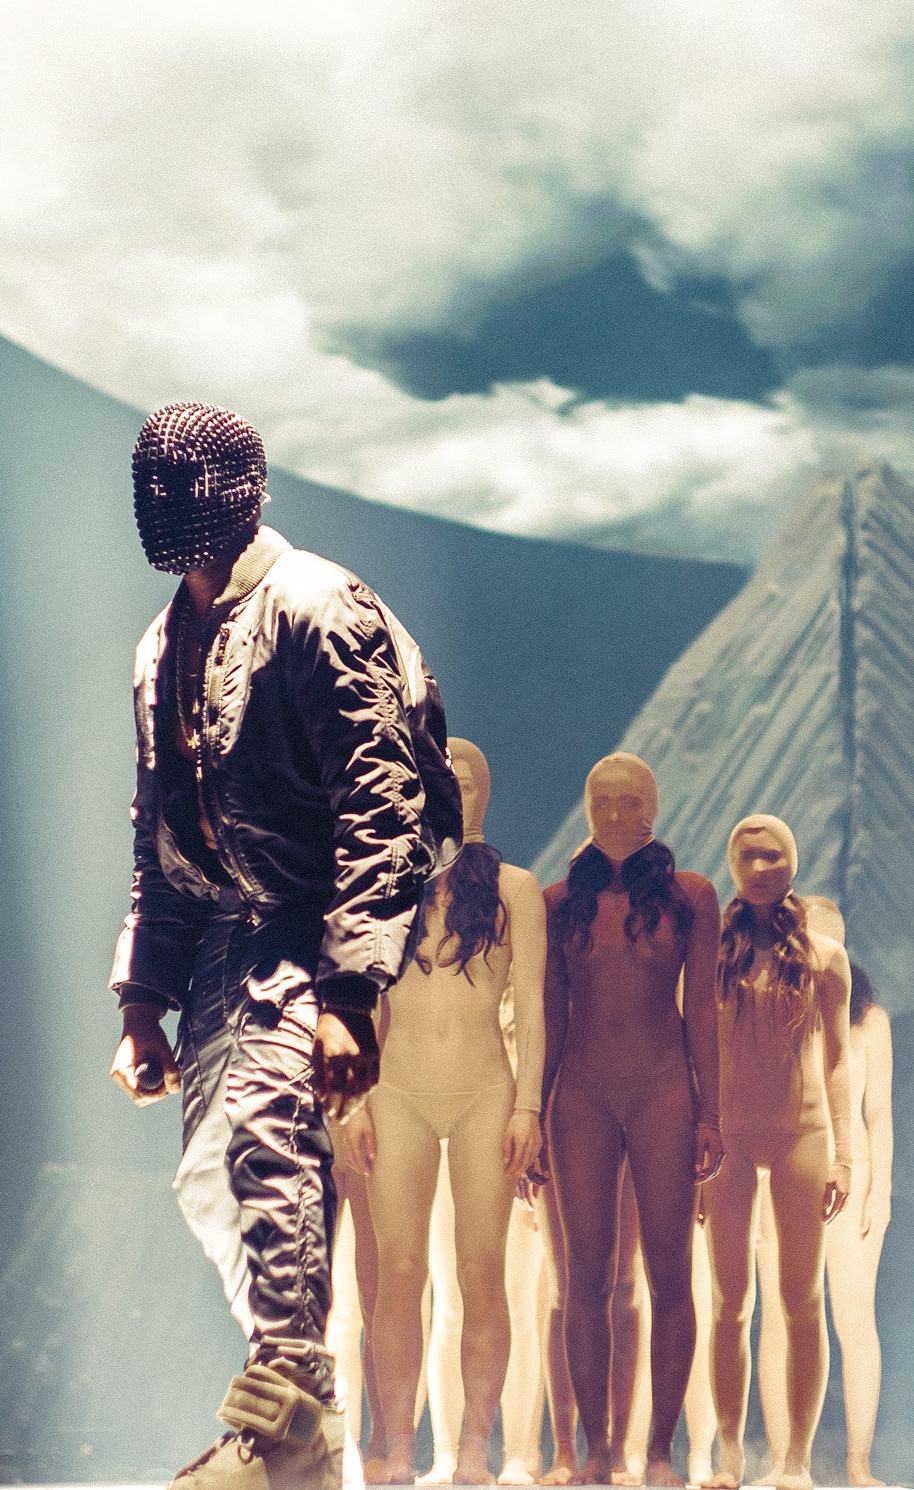 sir fawn Akhil Sesh StampdLA Yeezus Kanye West gods concert Performance atmosphere modeling margiela emerging talent Yeezus Tour creative art